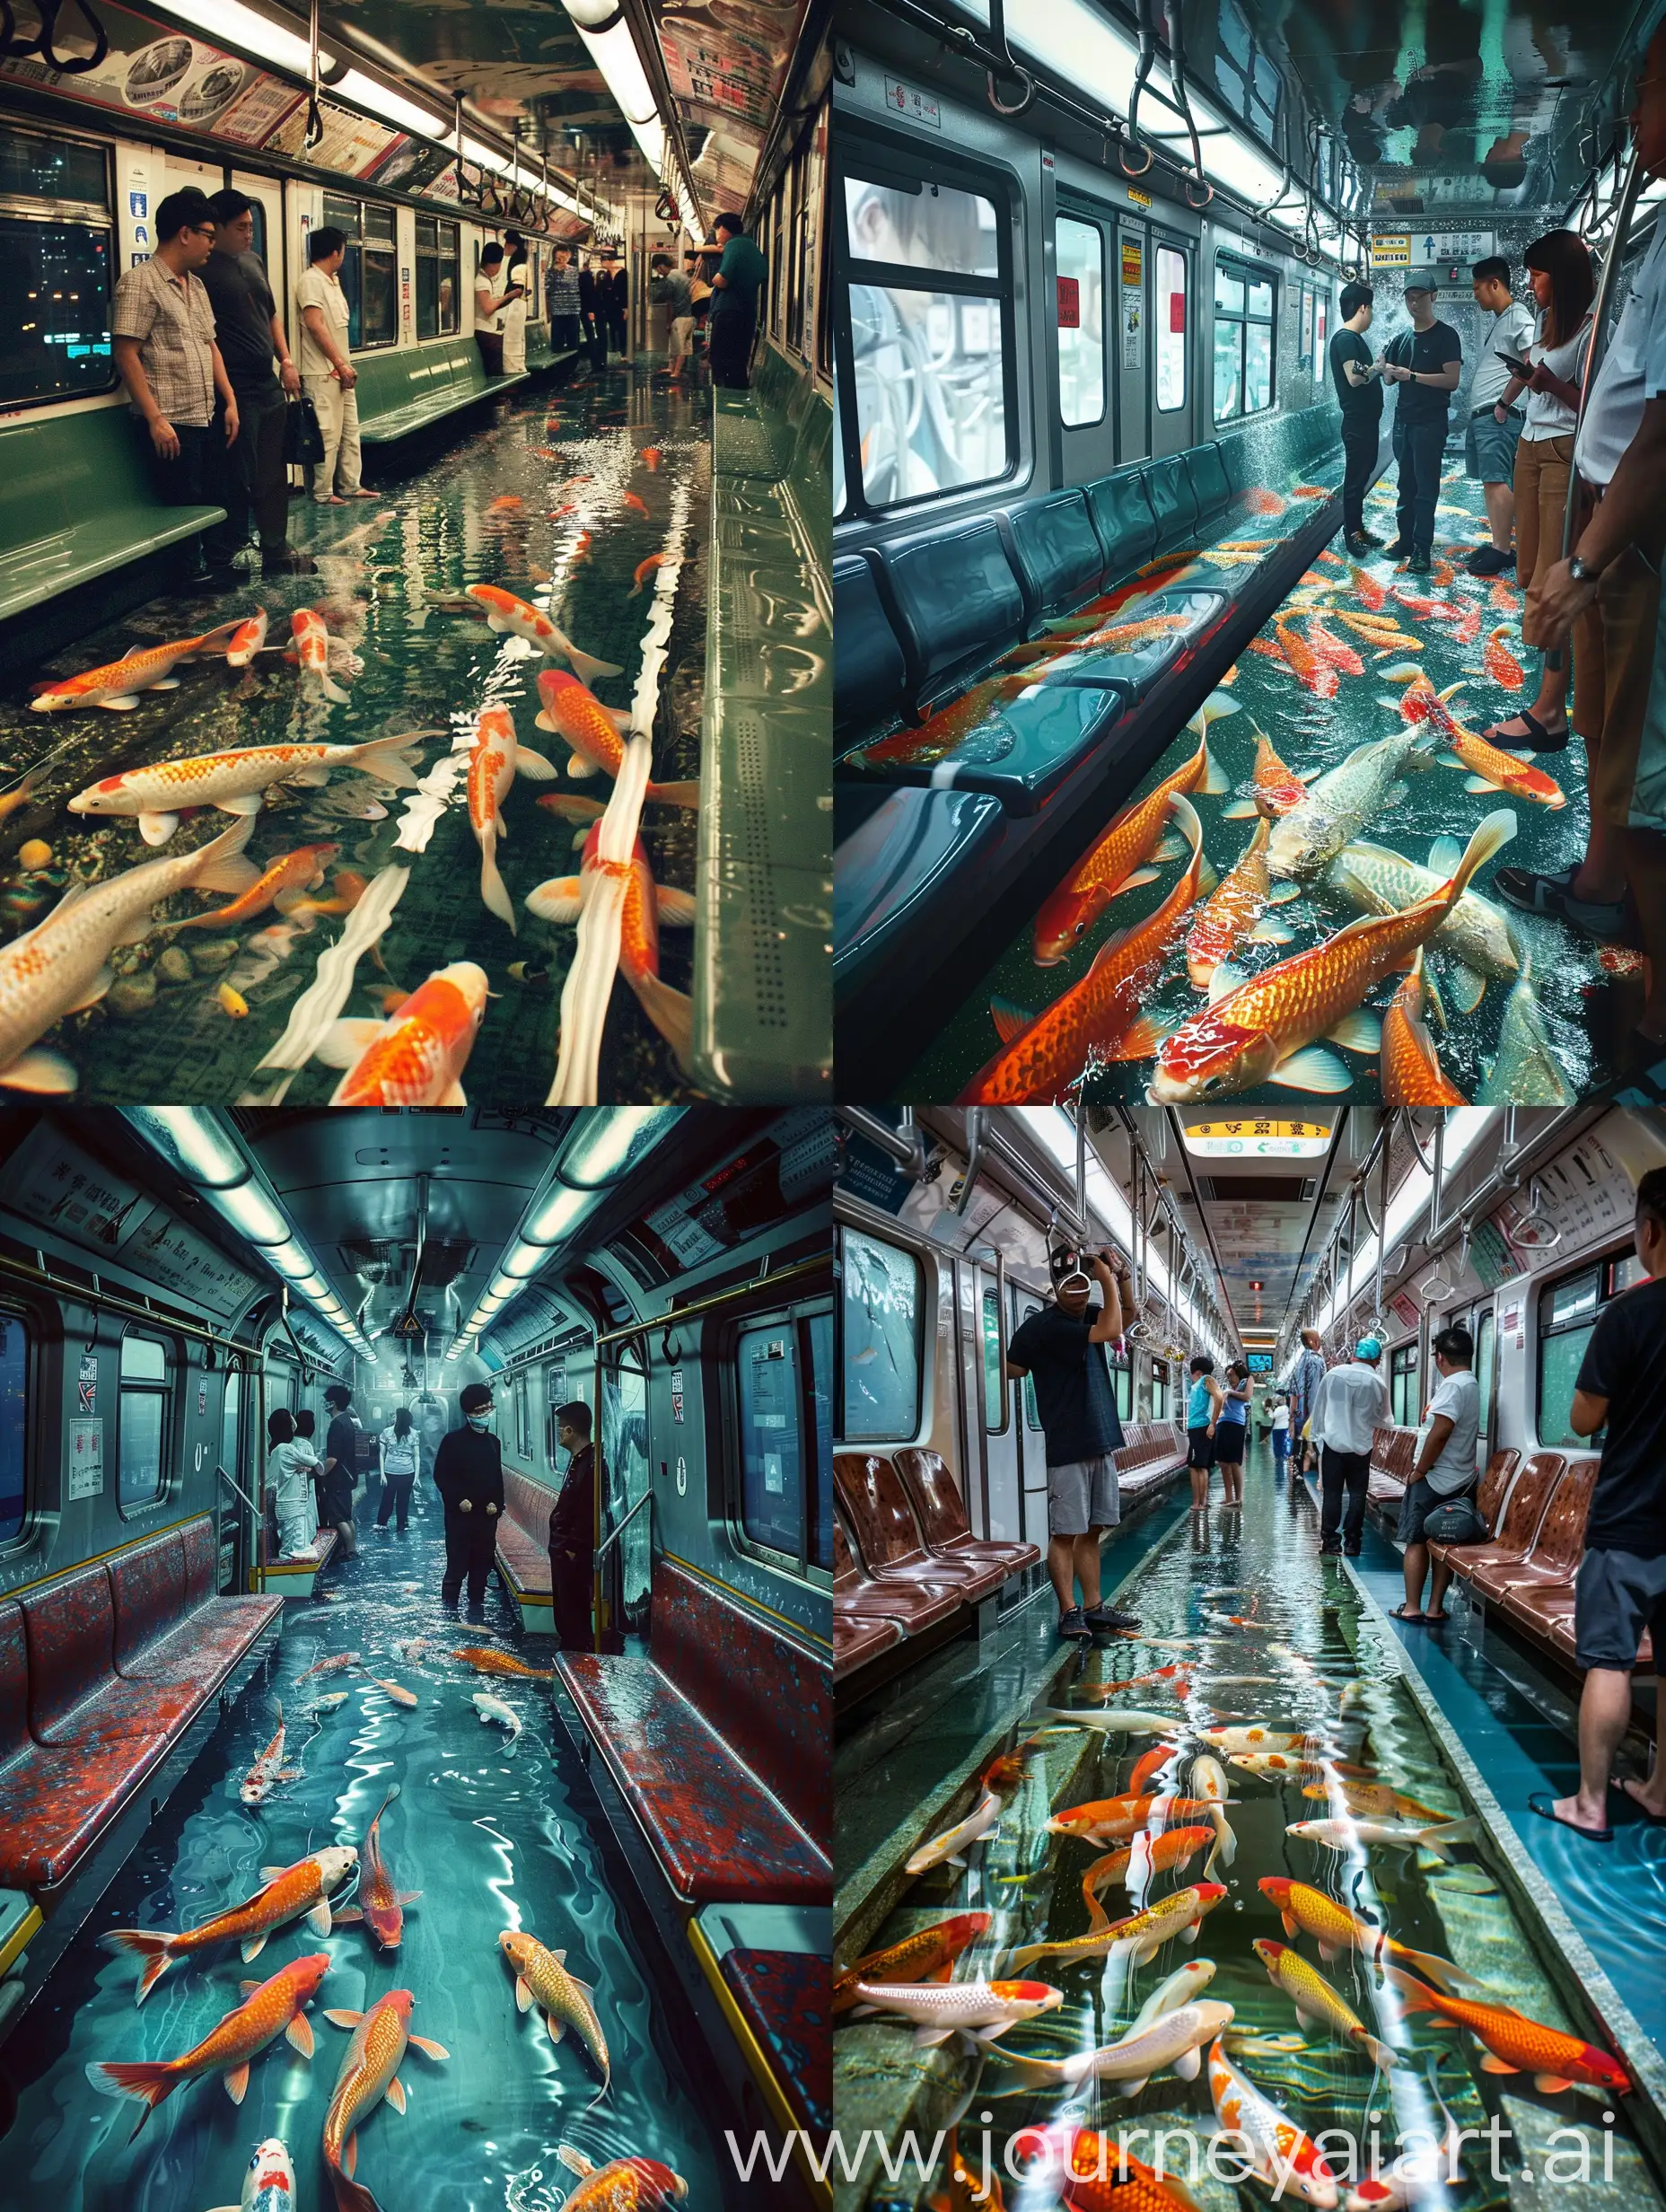 Surreal-Scene-Metro-Train-Adorned-with-Koi-Fish-and-Water